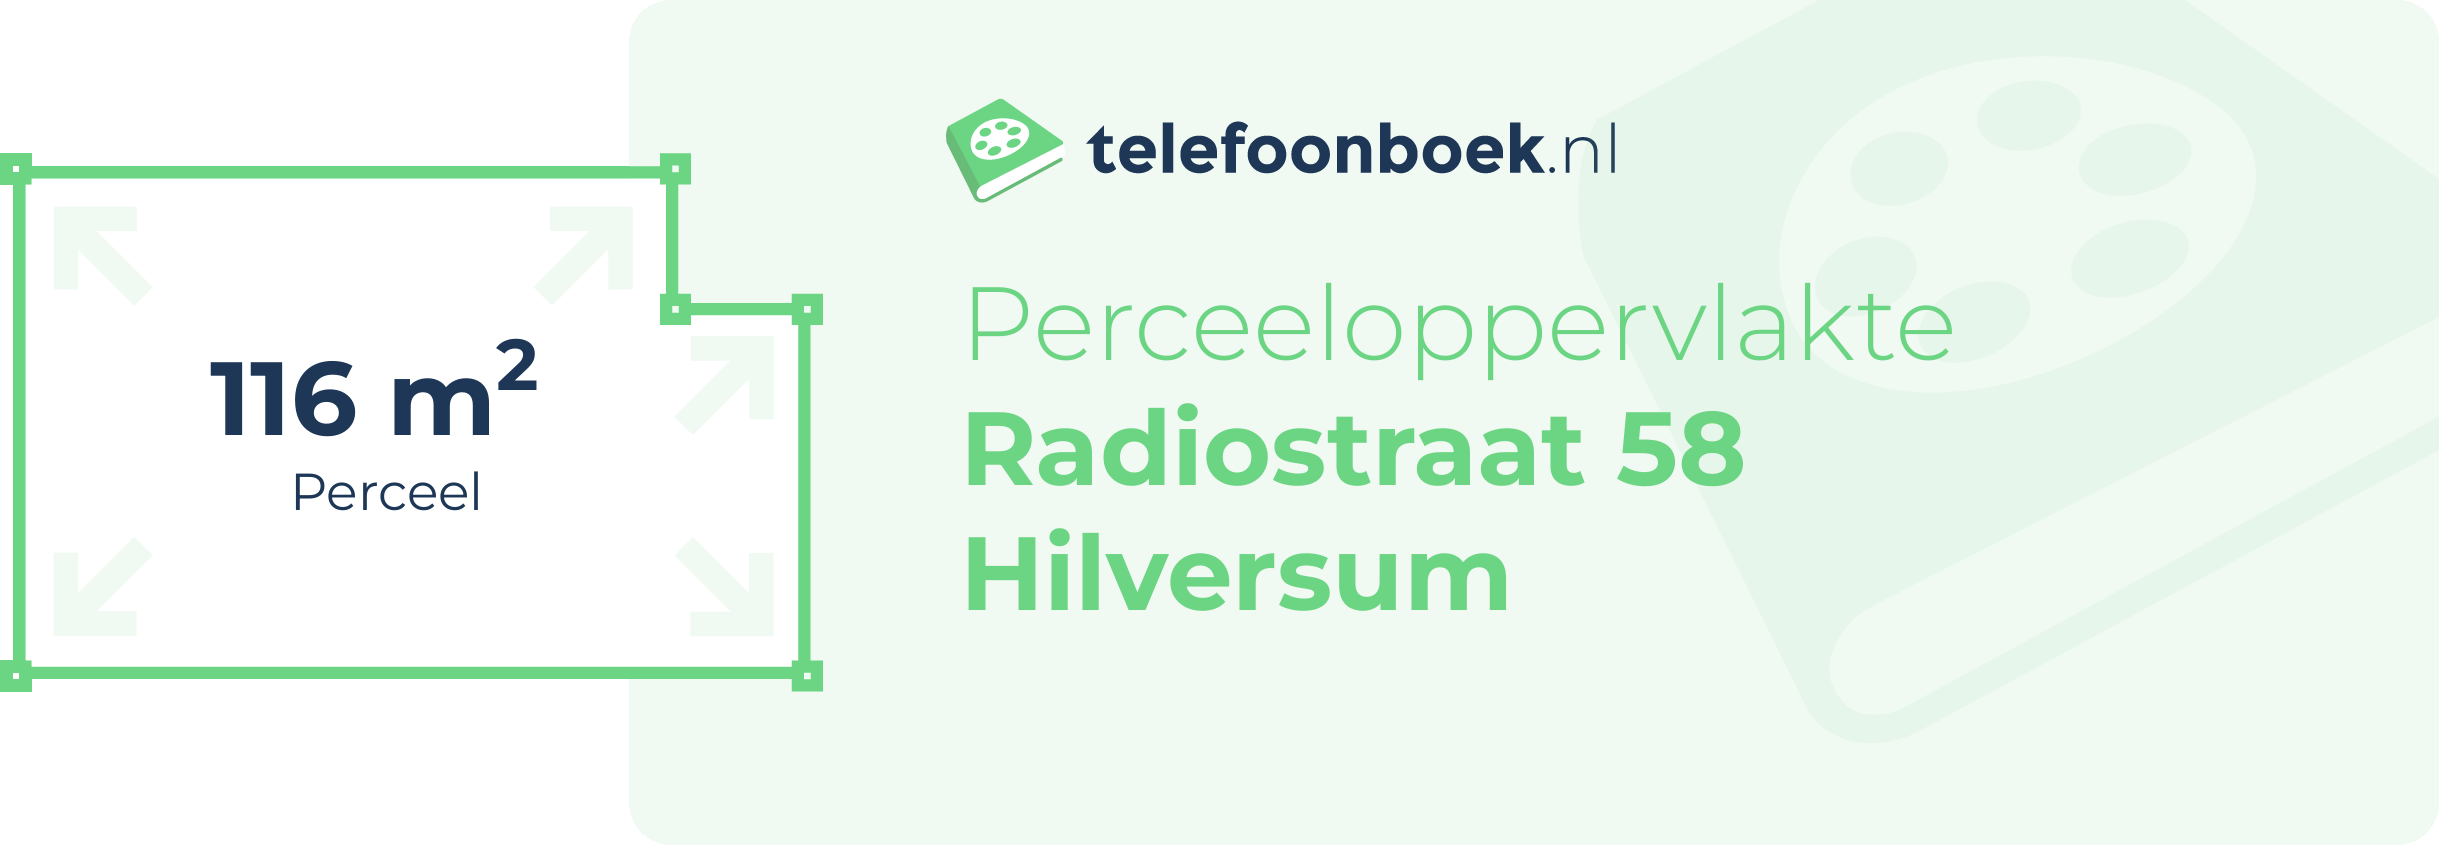 Perceeloppervlakte Radiostraat 58 Hilversum